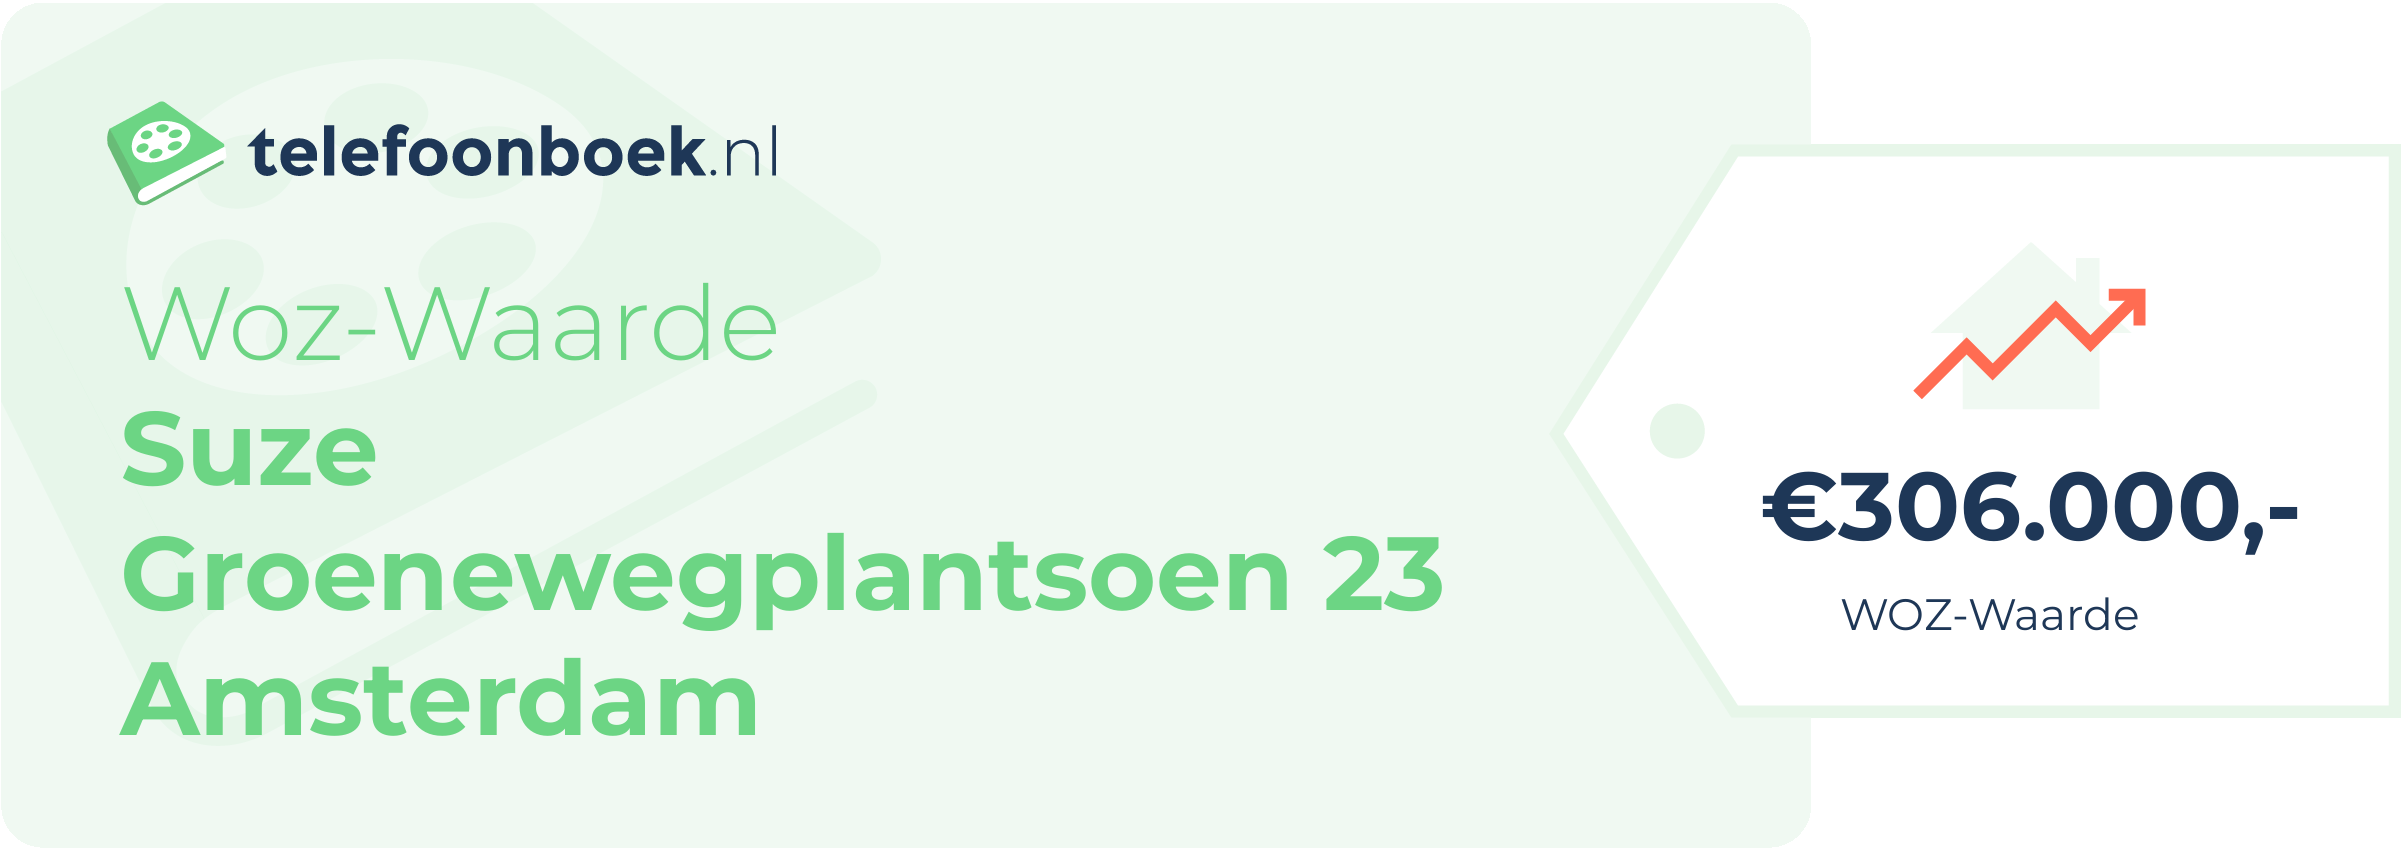 WOZ-waarde Suze Groenewegplantsoen 23 Amsterdam